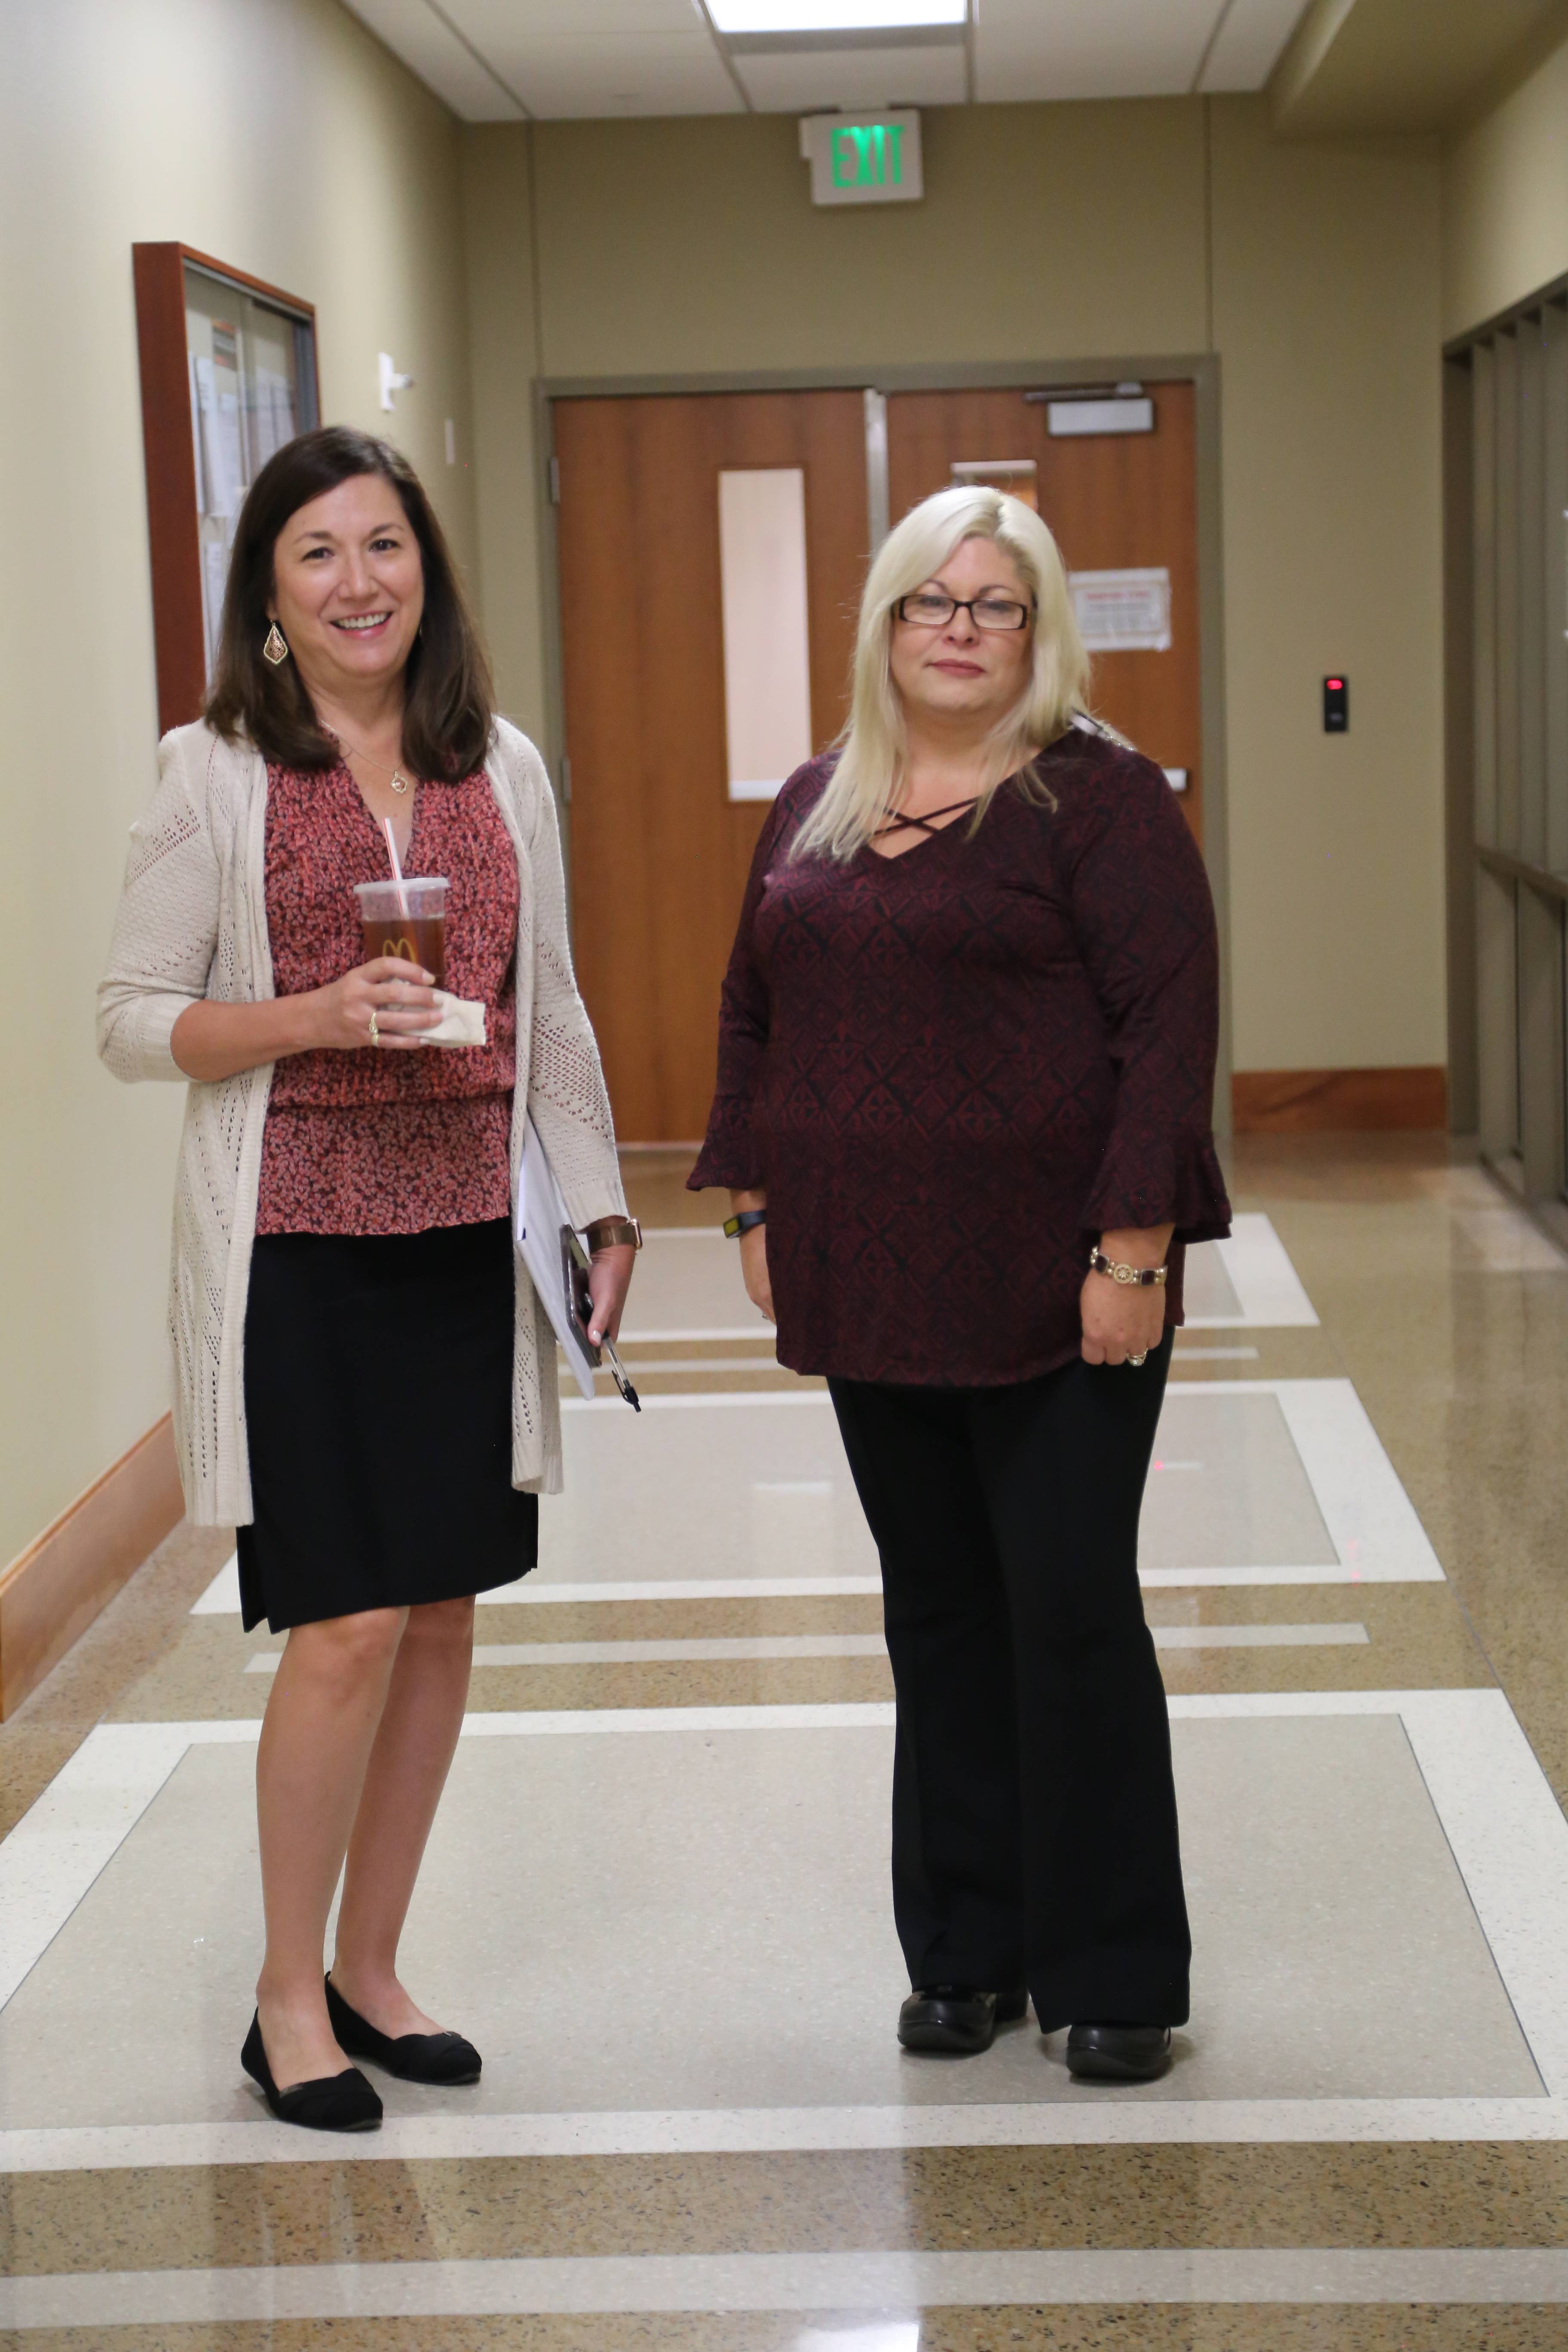 Two Nursing faculty standing in hallway